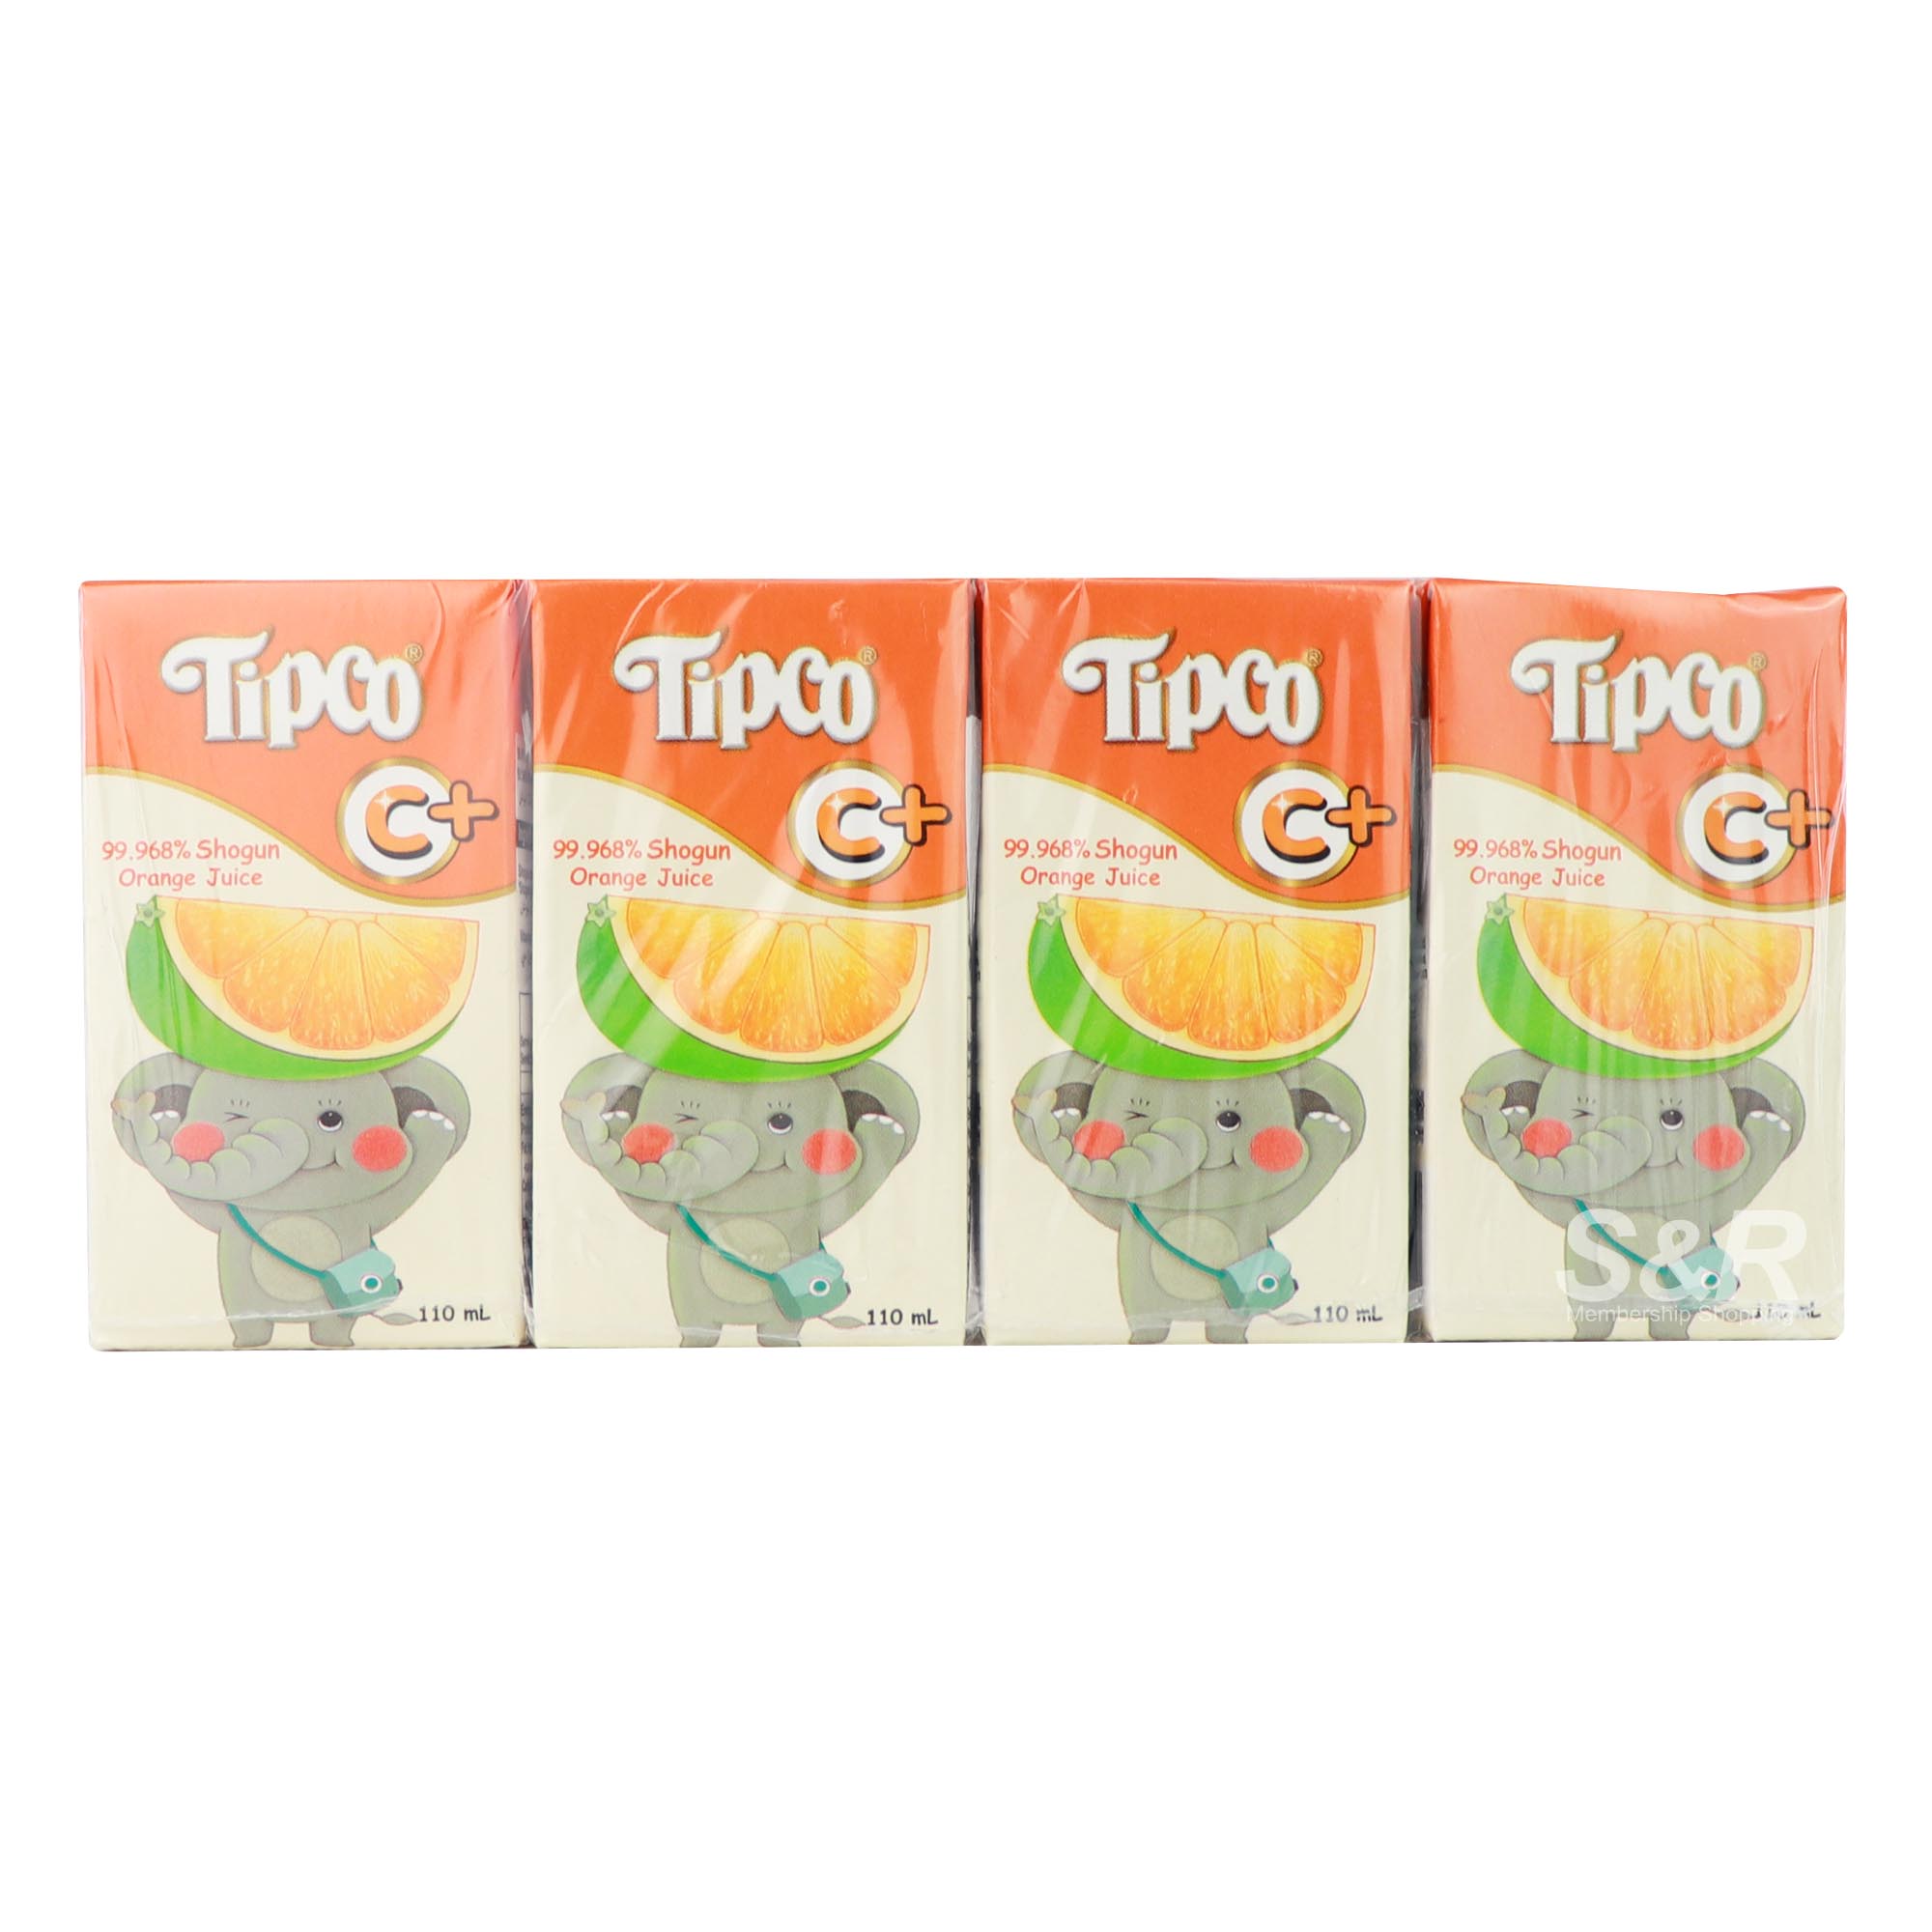 Tipco Shogun Orange Juice 4pcs x 110mL